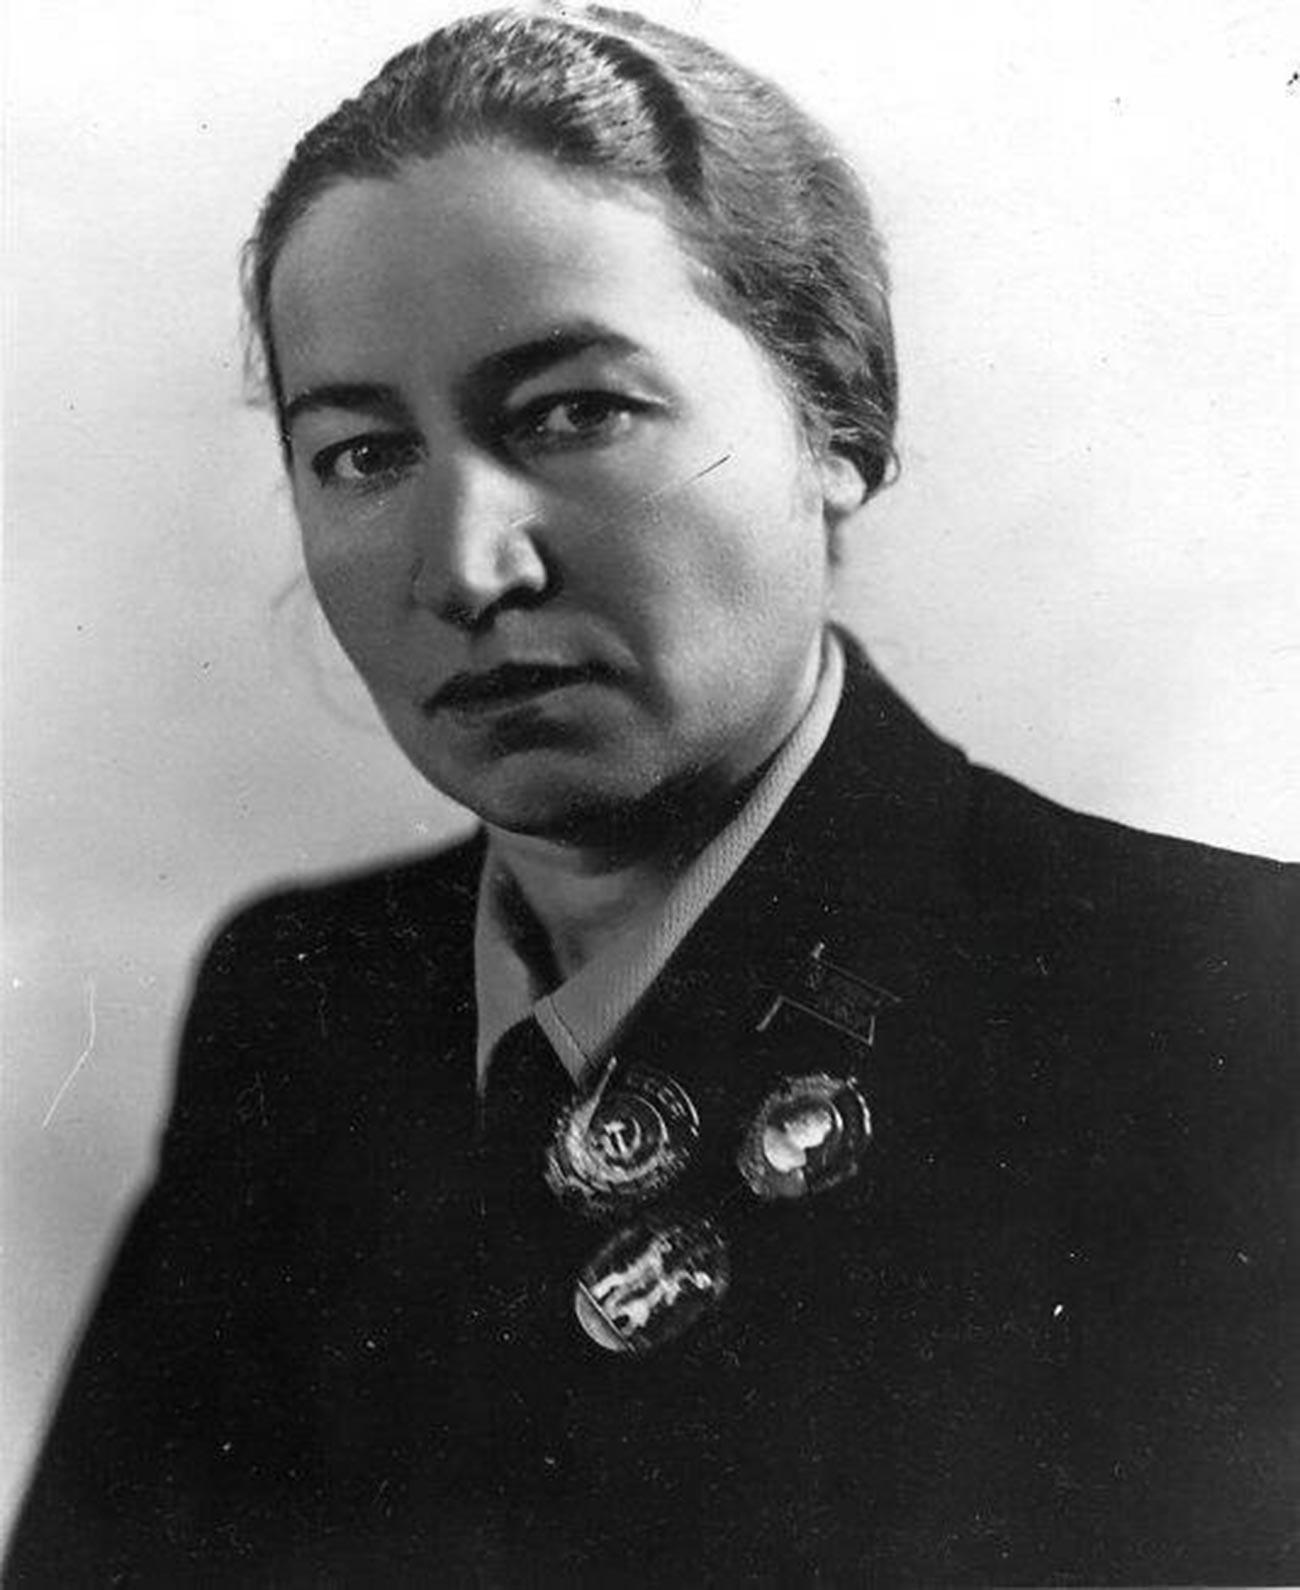 Polina Zhemchuzhina, deputata del Soviet Supremo dell'Unione Sovietica 